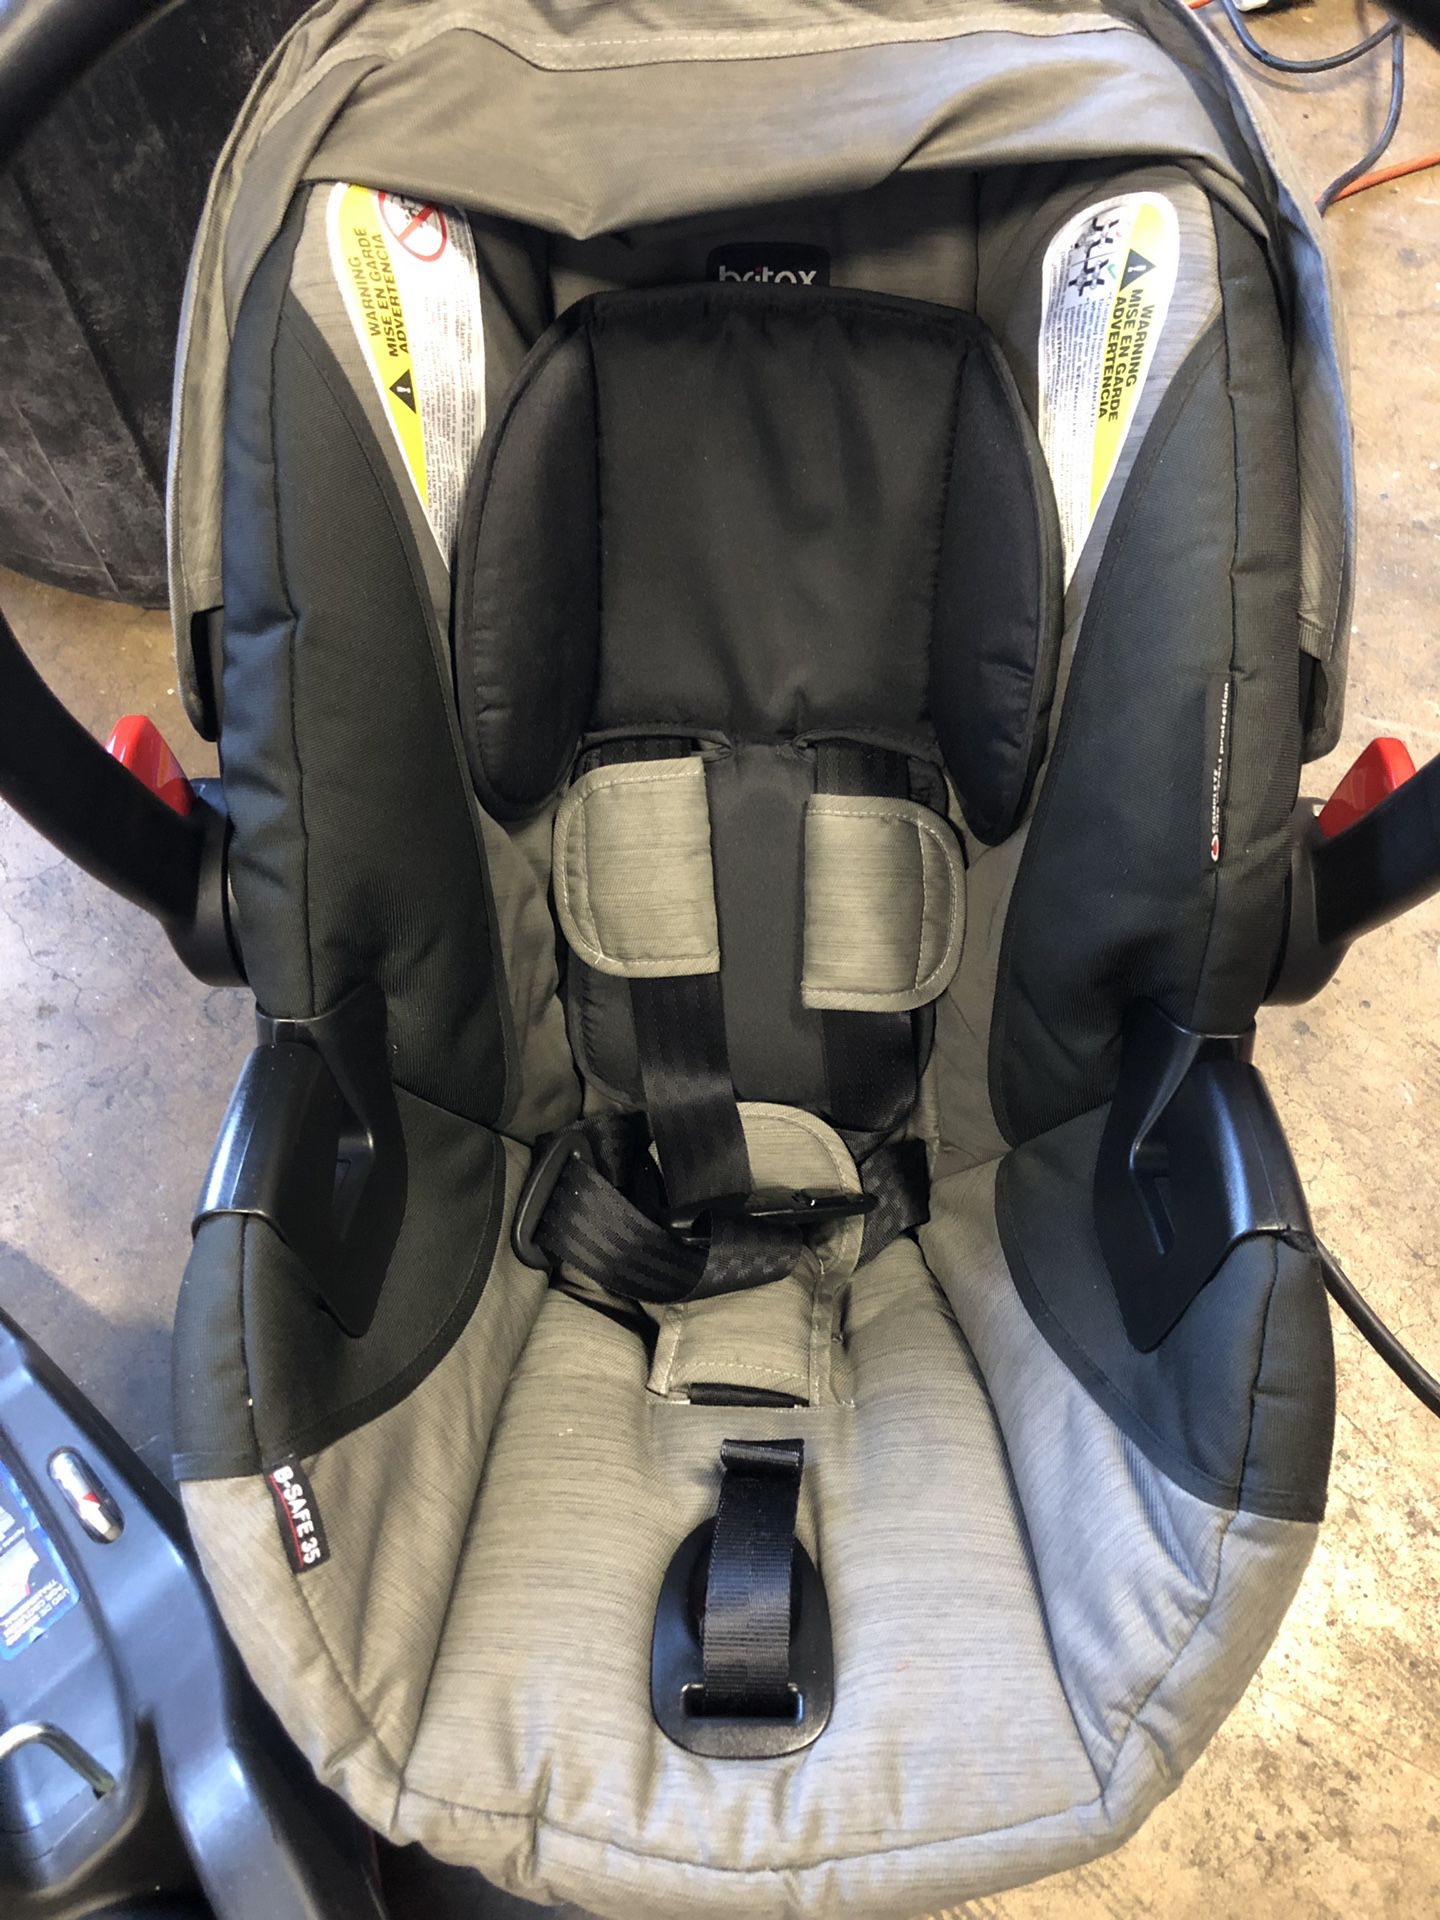 Britax BSafe 35 rear facing infant car seat CLEAN